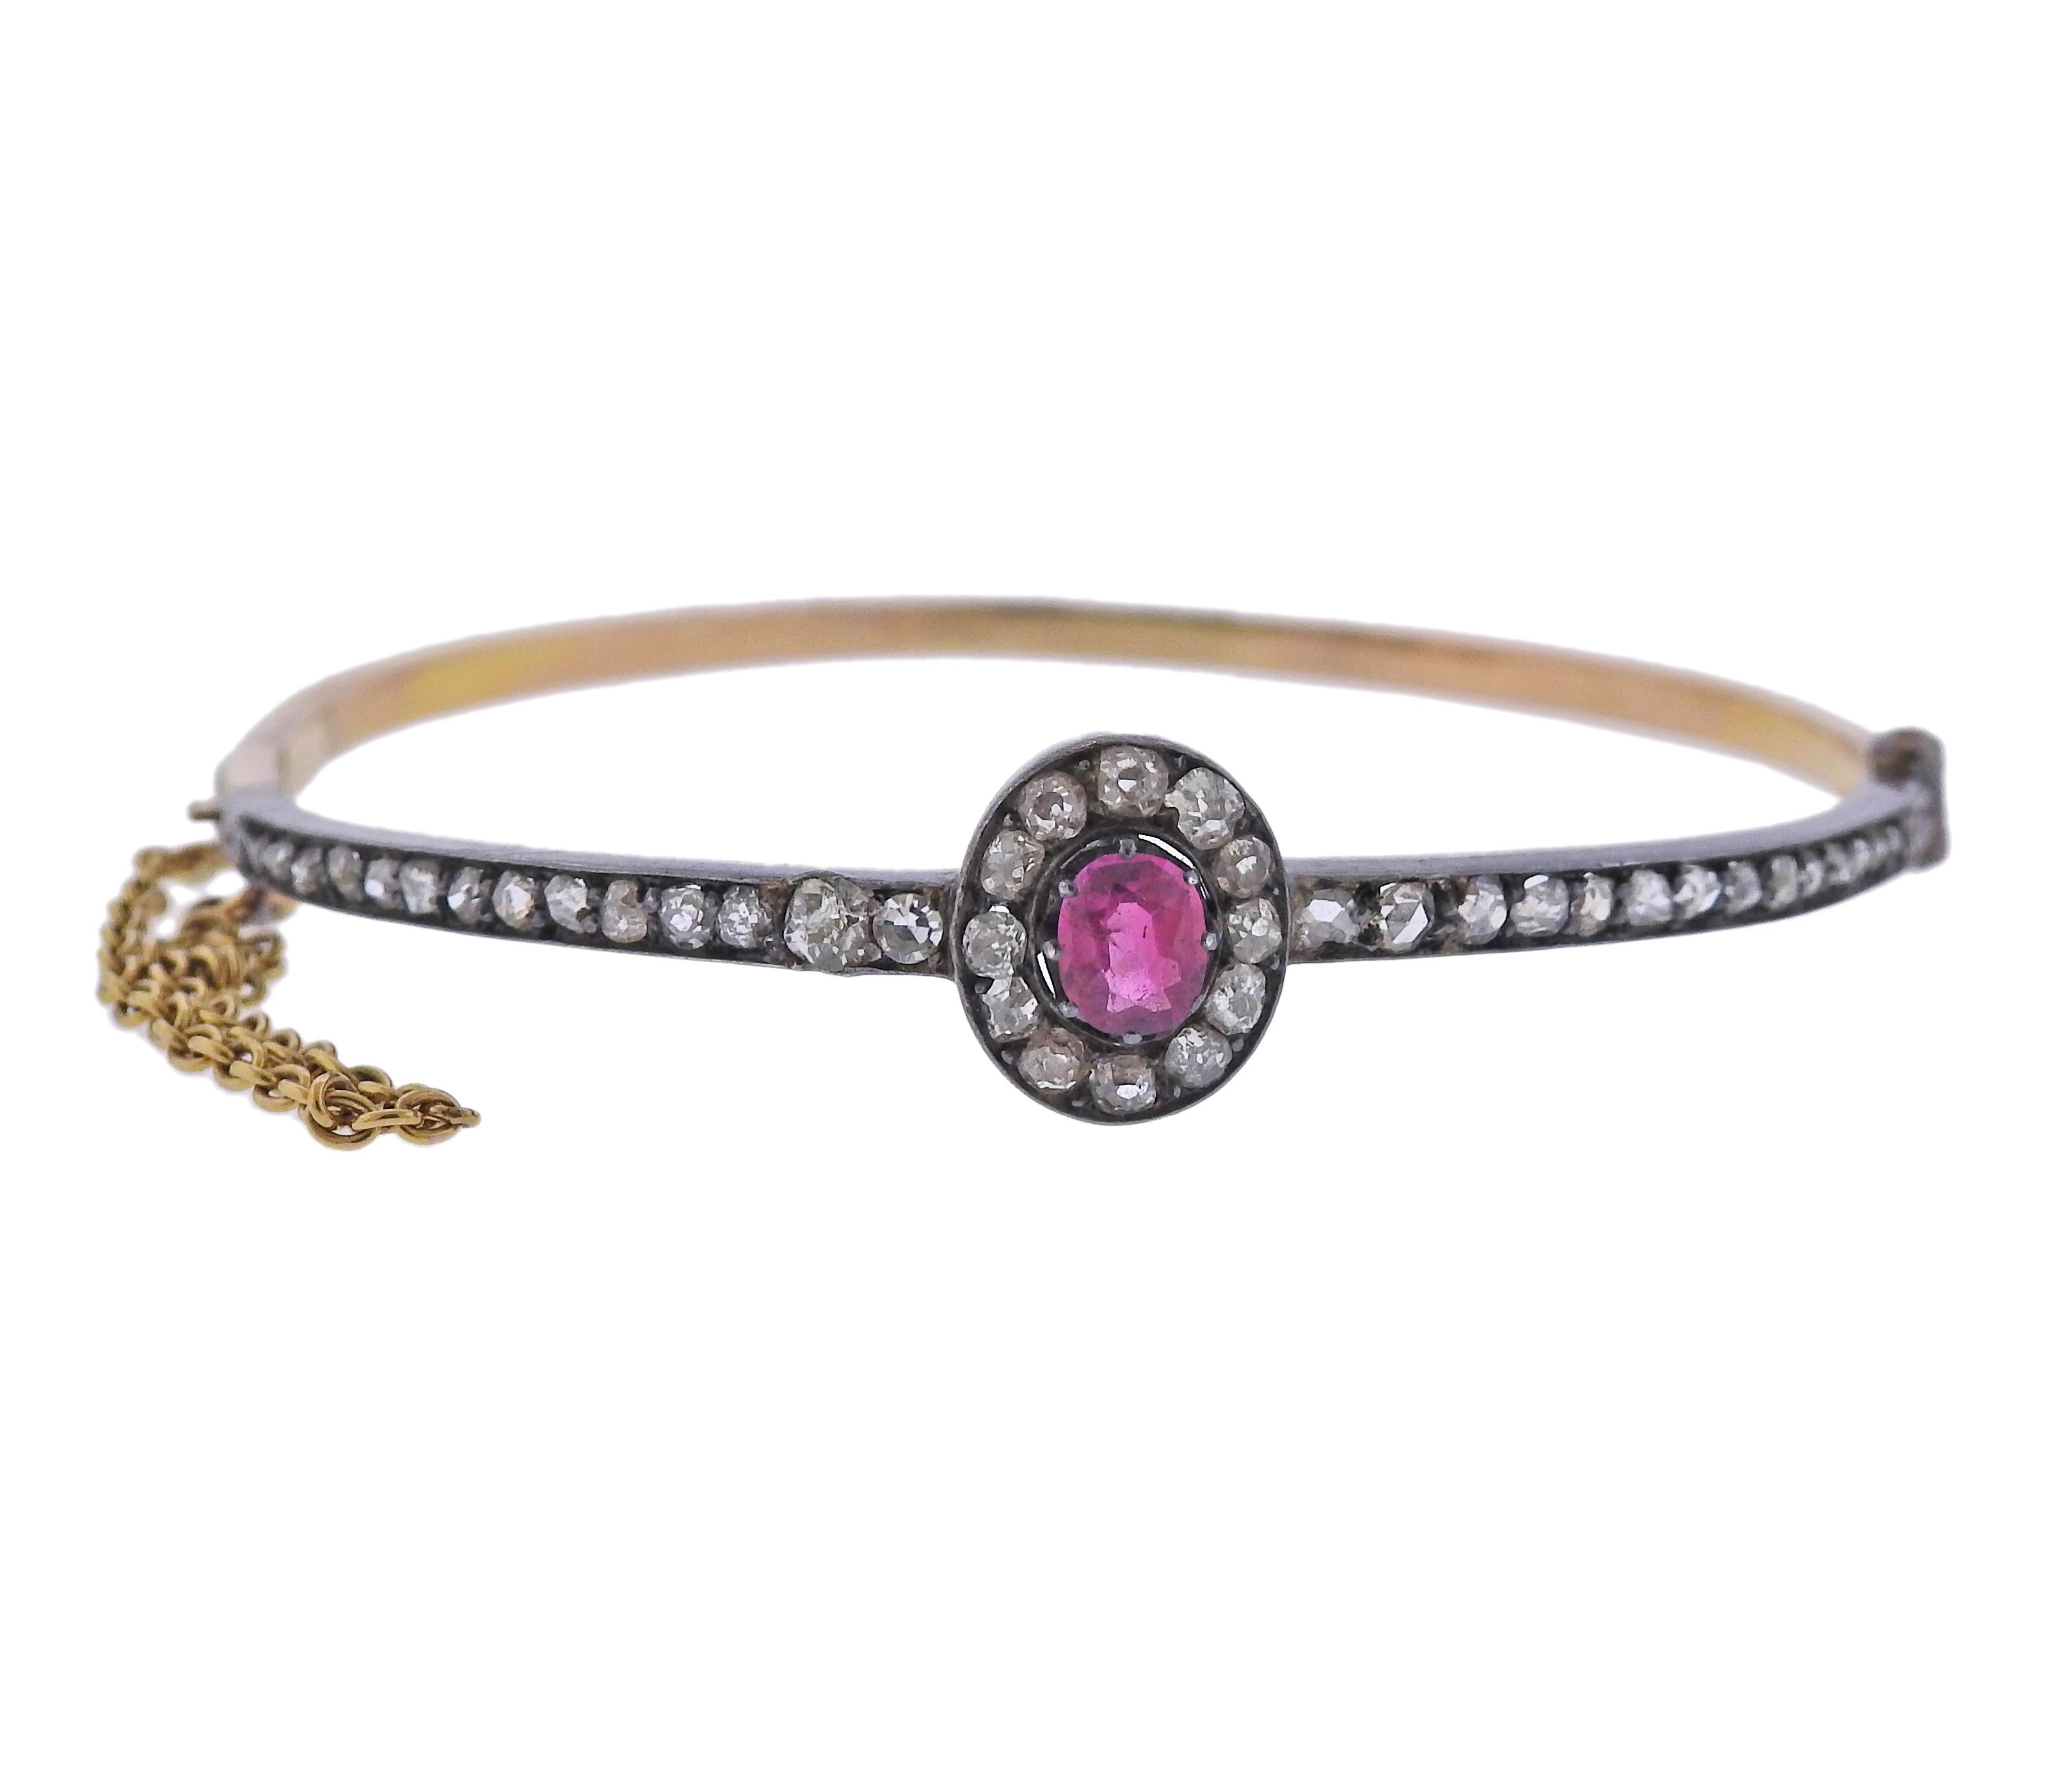 Victorian Antique Gold Silver Diamond Ruby Bracelet